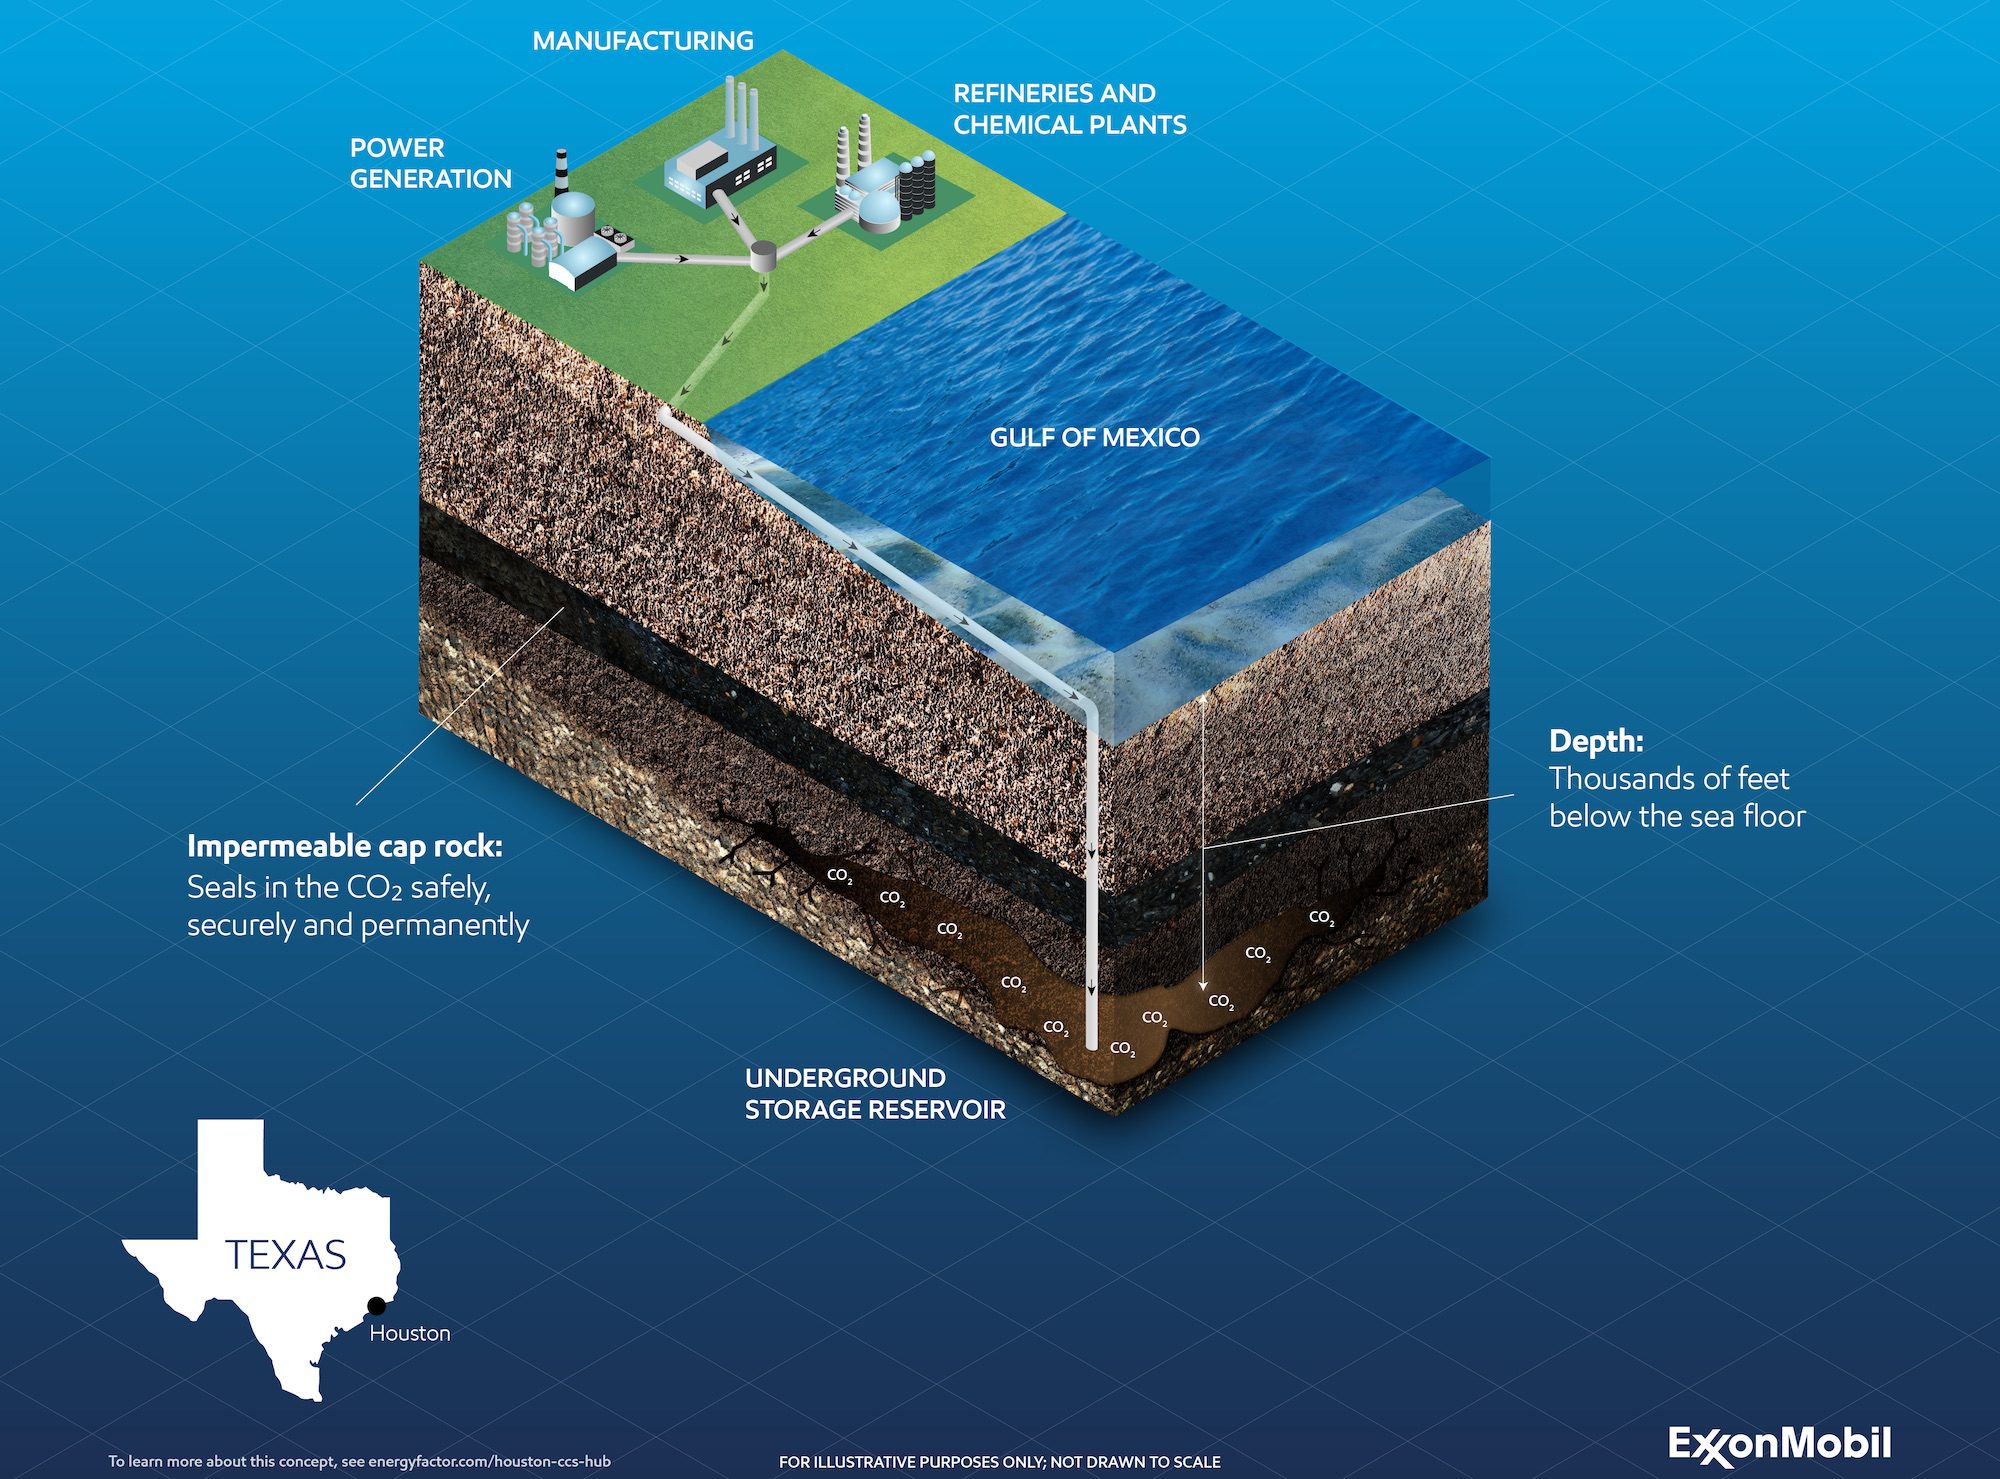 Exxon Mobil carbon capture and storage illustration